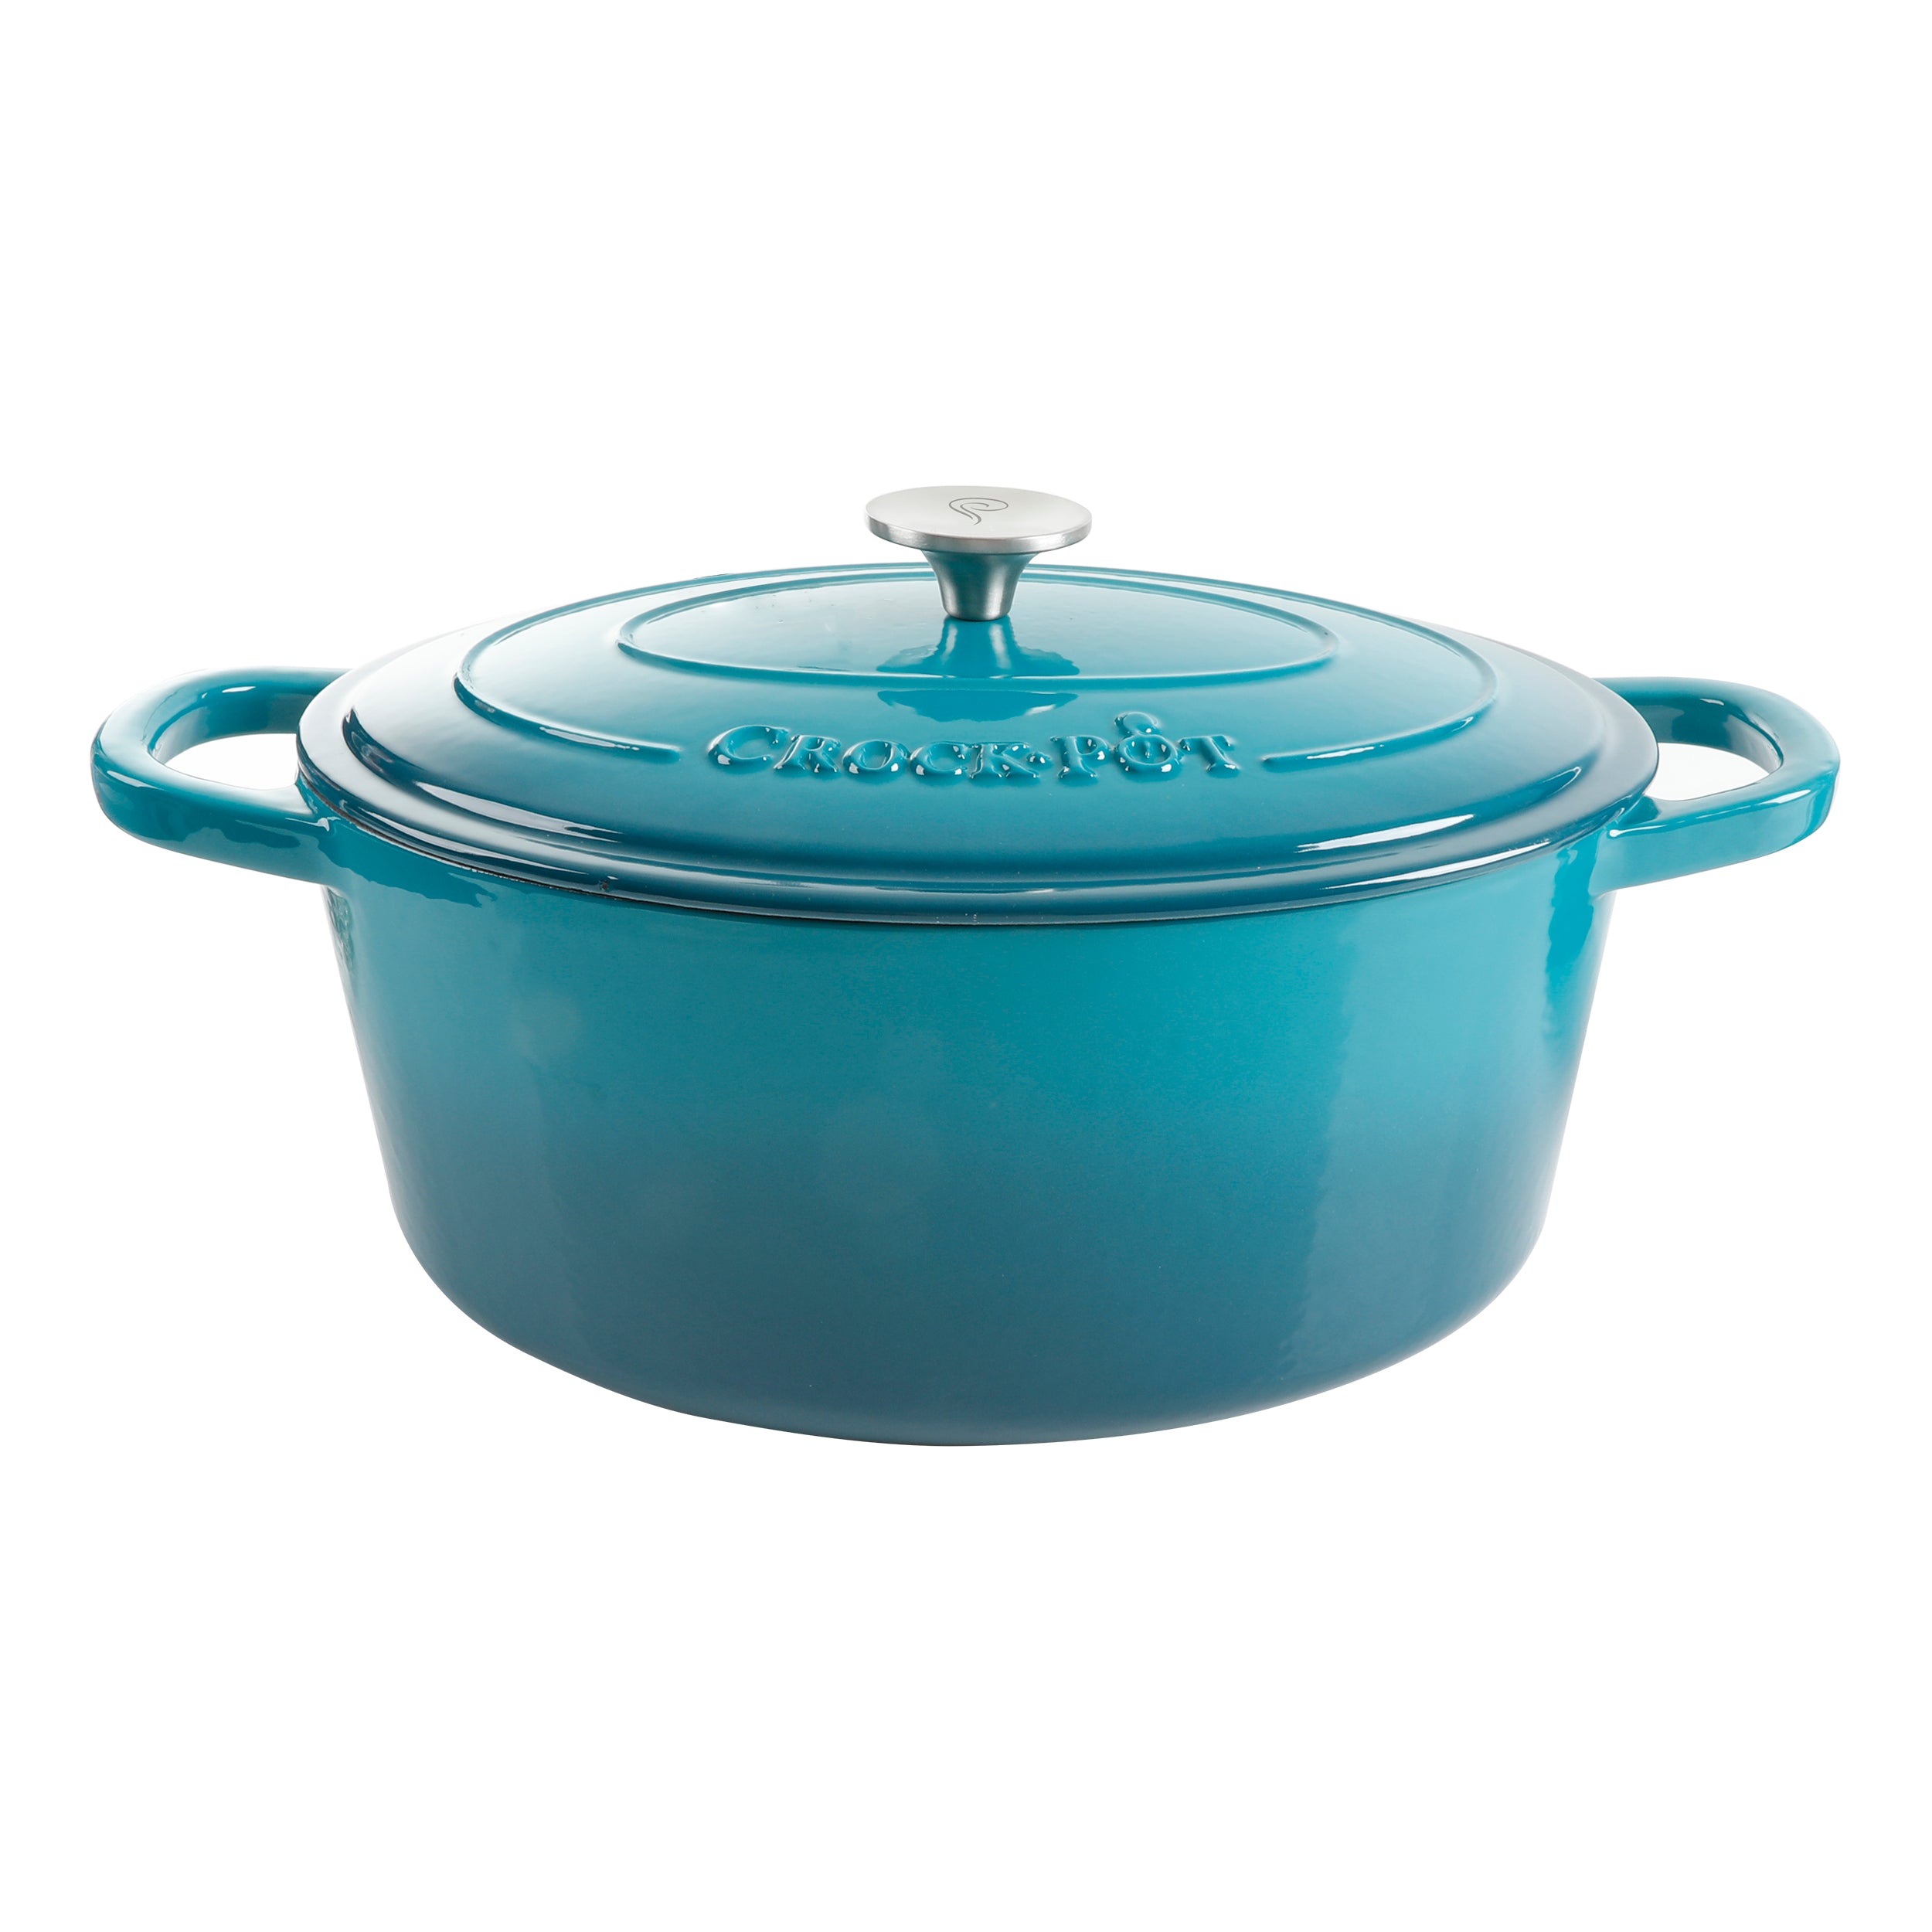  Crock Pot Artisan Enameled Cast Iron 7-Quart Oval Dutch Oven,  Sapphire Blue -: Home & Kitchen